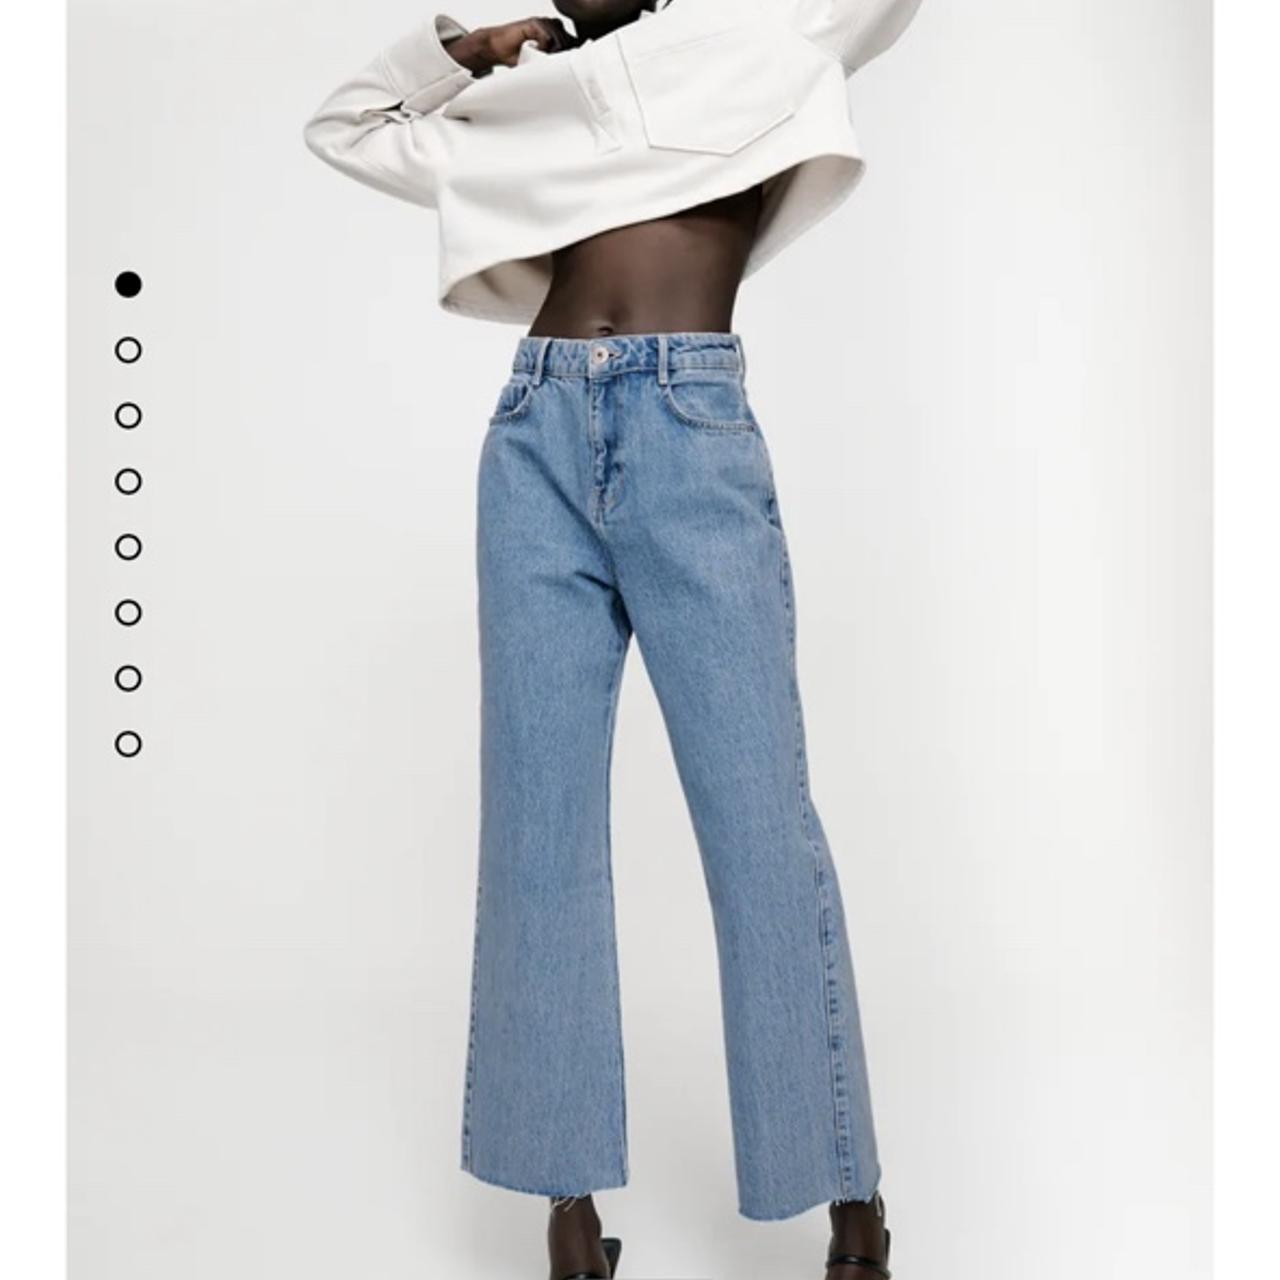 Zara Women's Blue and Navy Jeans (4)